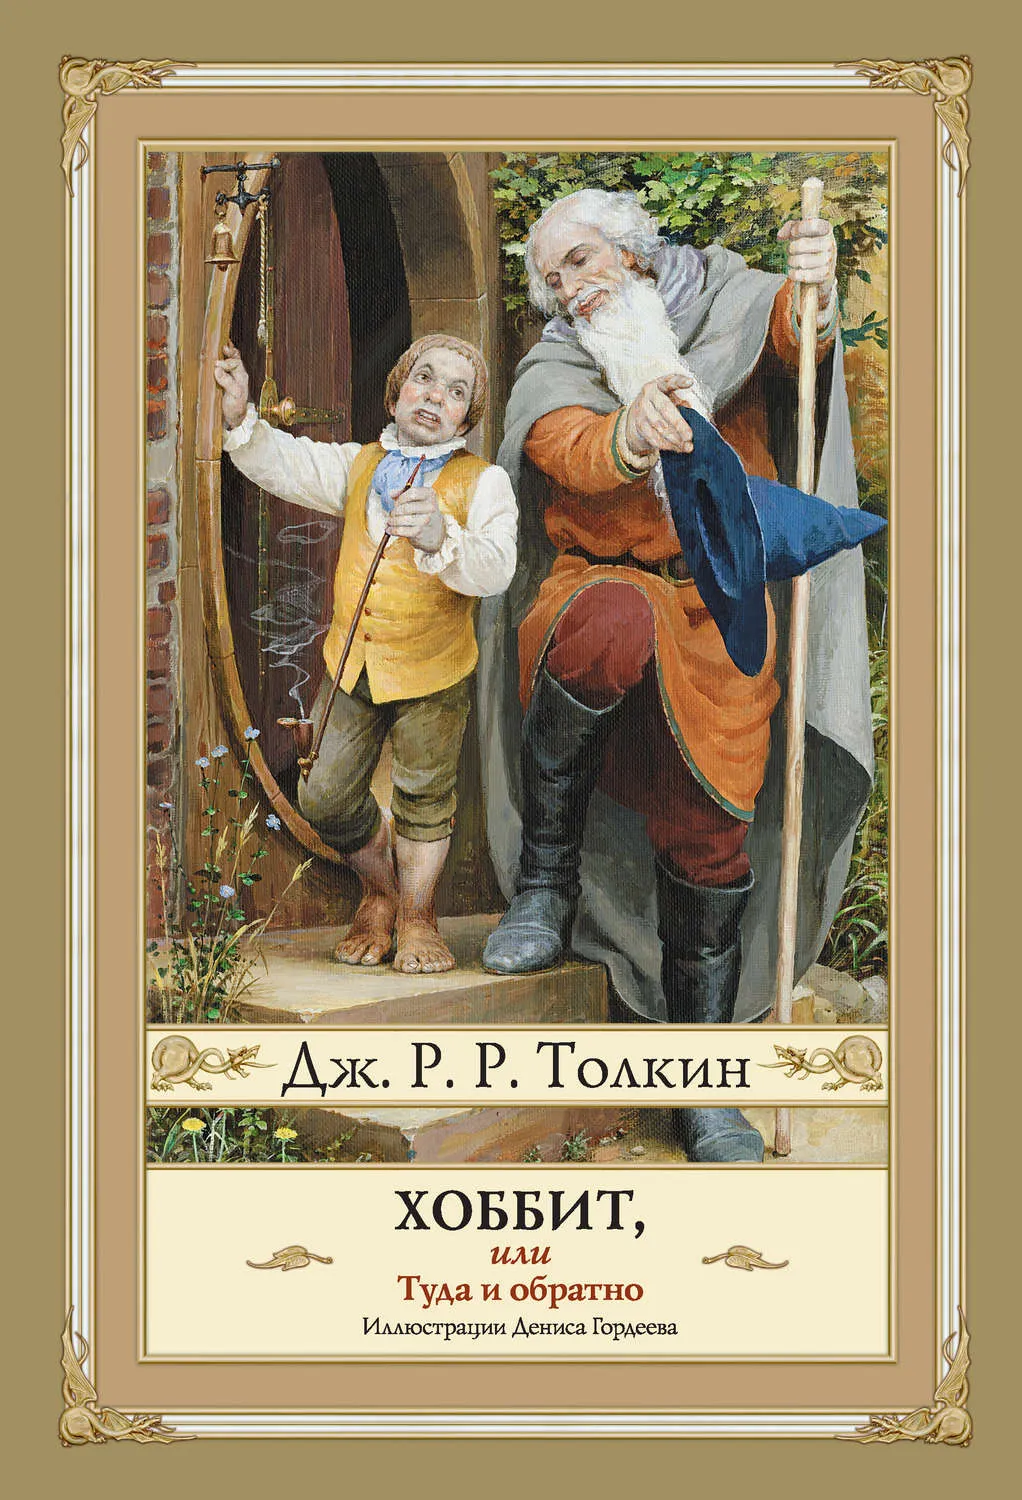 Обложка книги "Хоббит или туда и обратно" Джона Толкиена